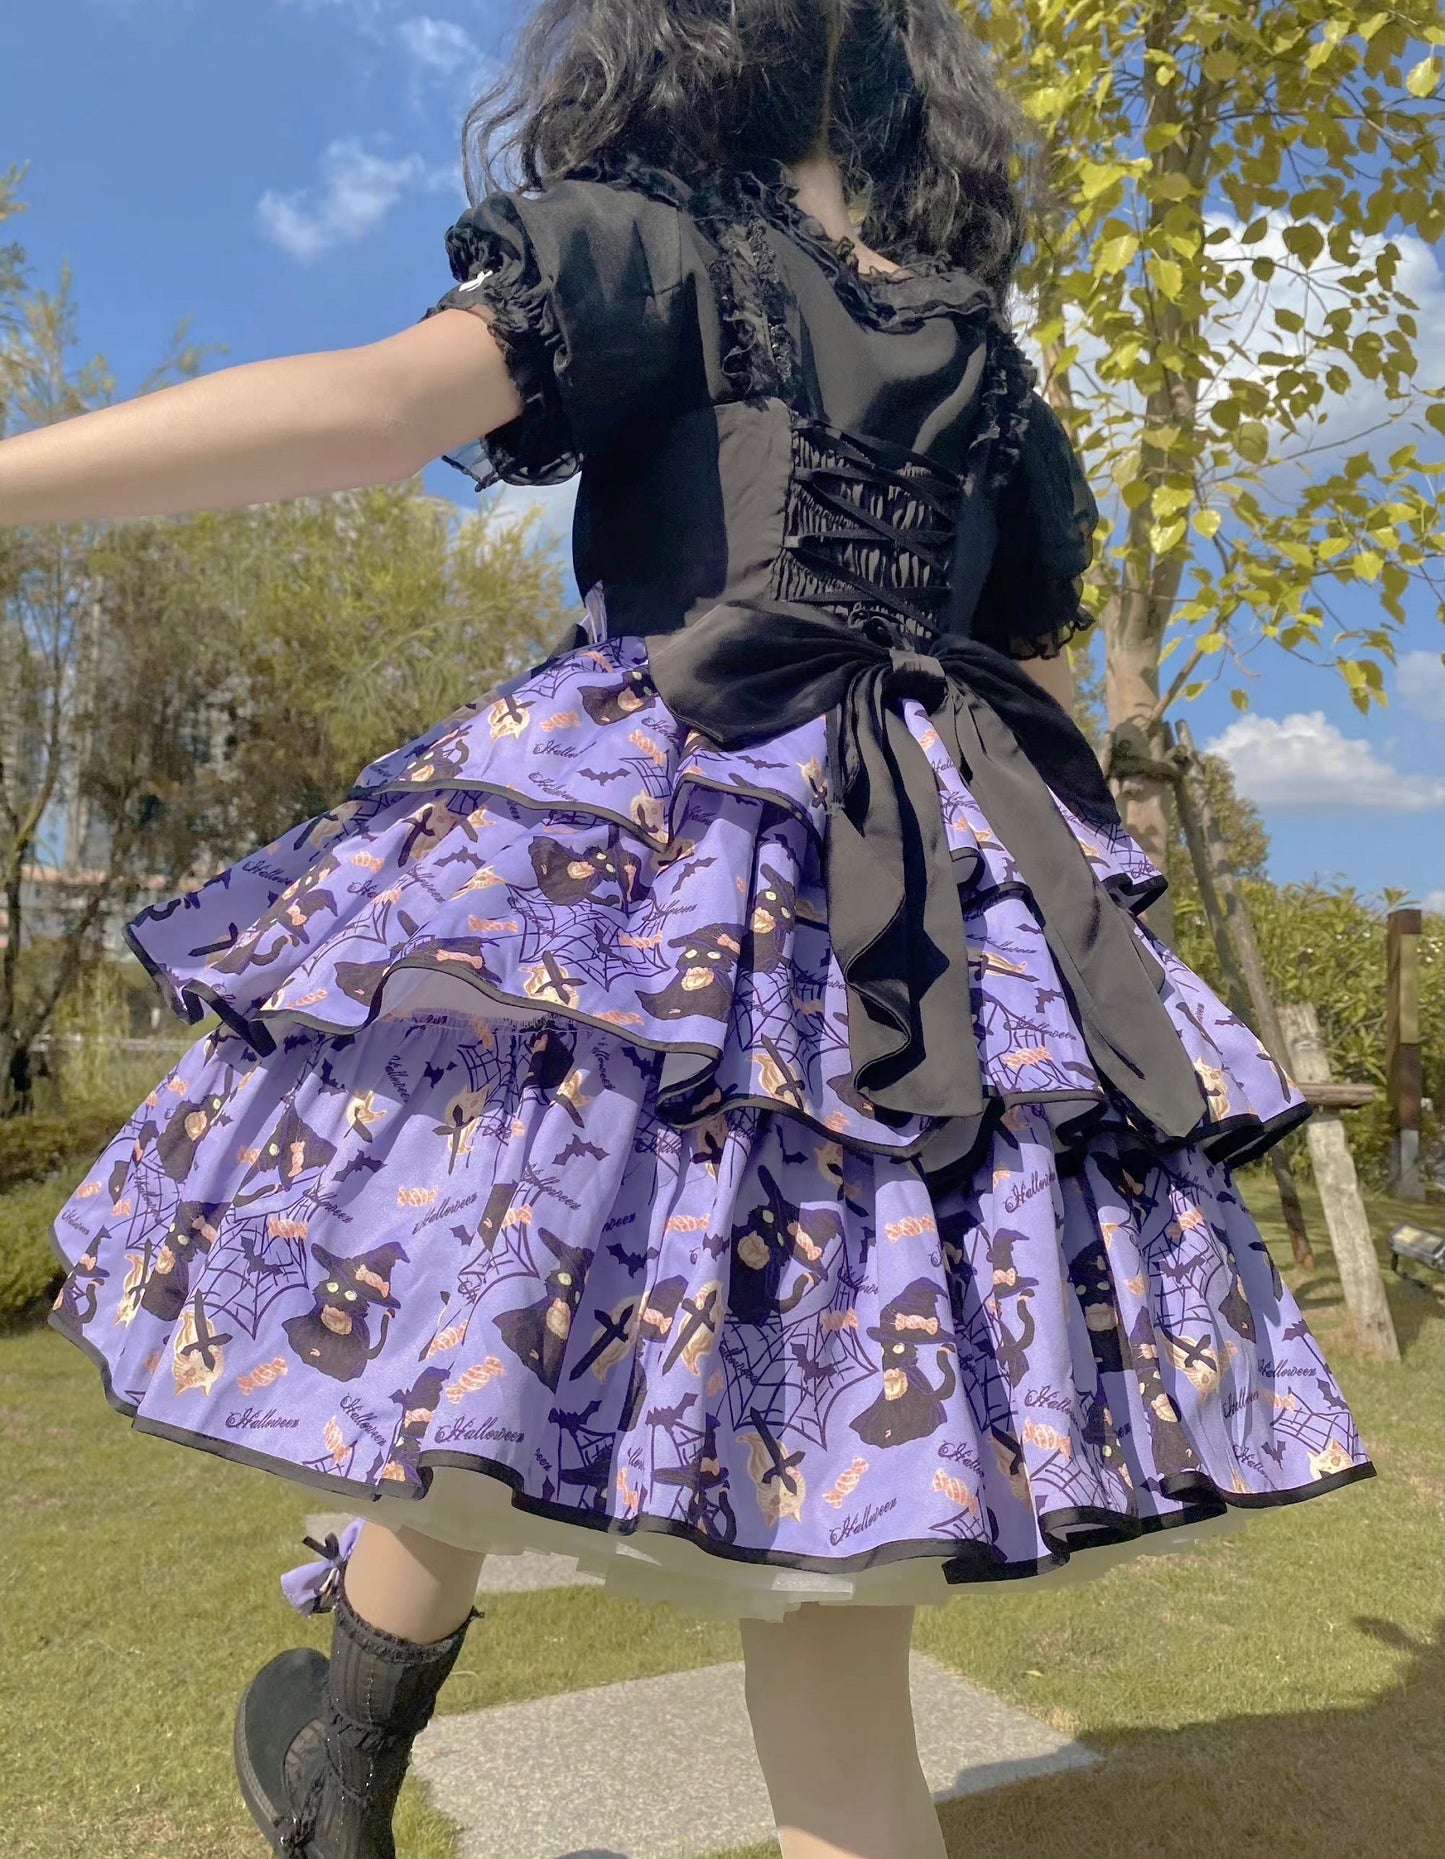 Halloween Lolita Dress UB98601